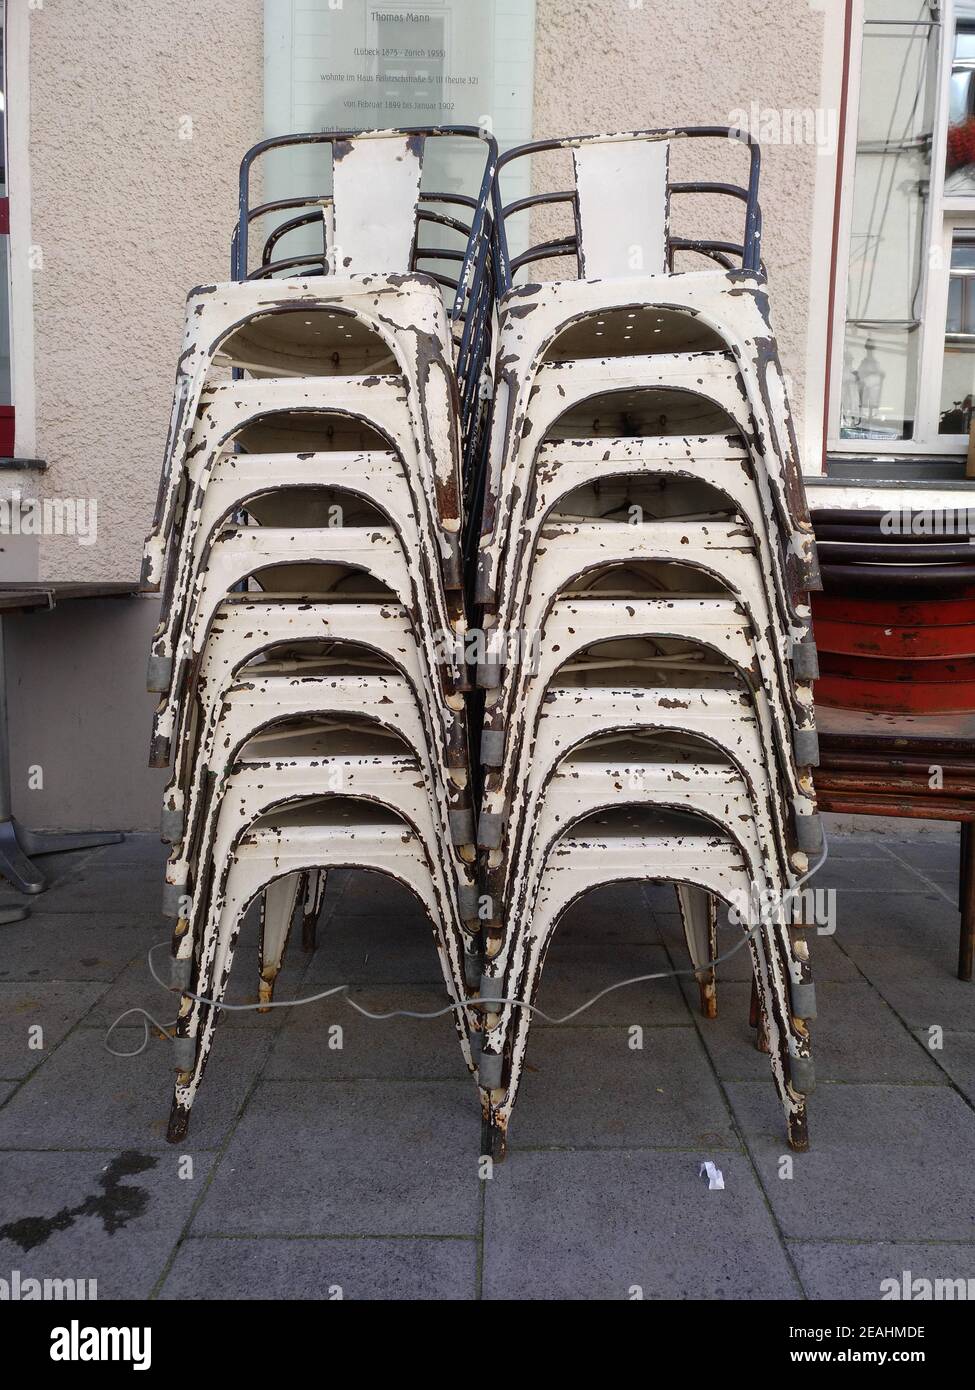 Munich Lockdown, Chairs piled up. Bavaria Bayern, Germany Stock Photo